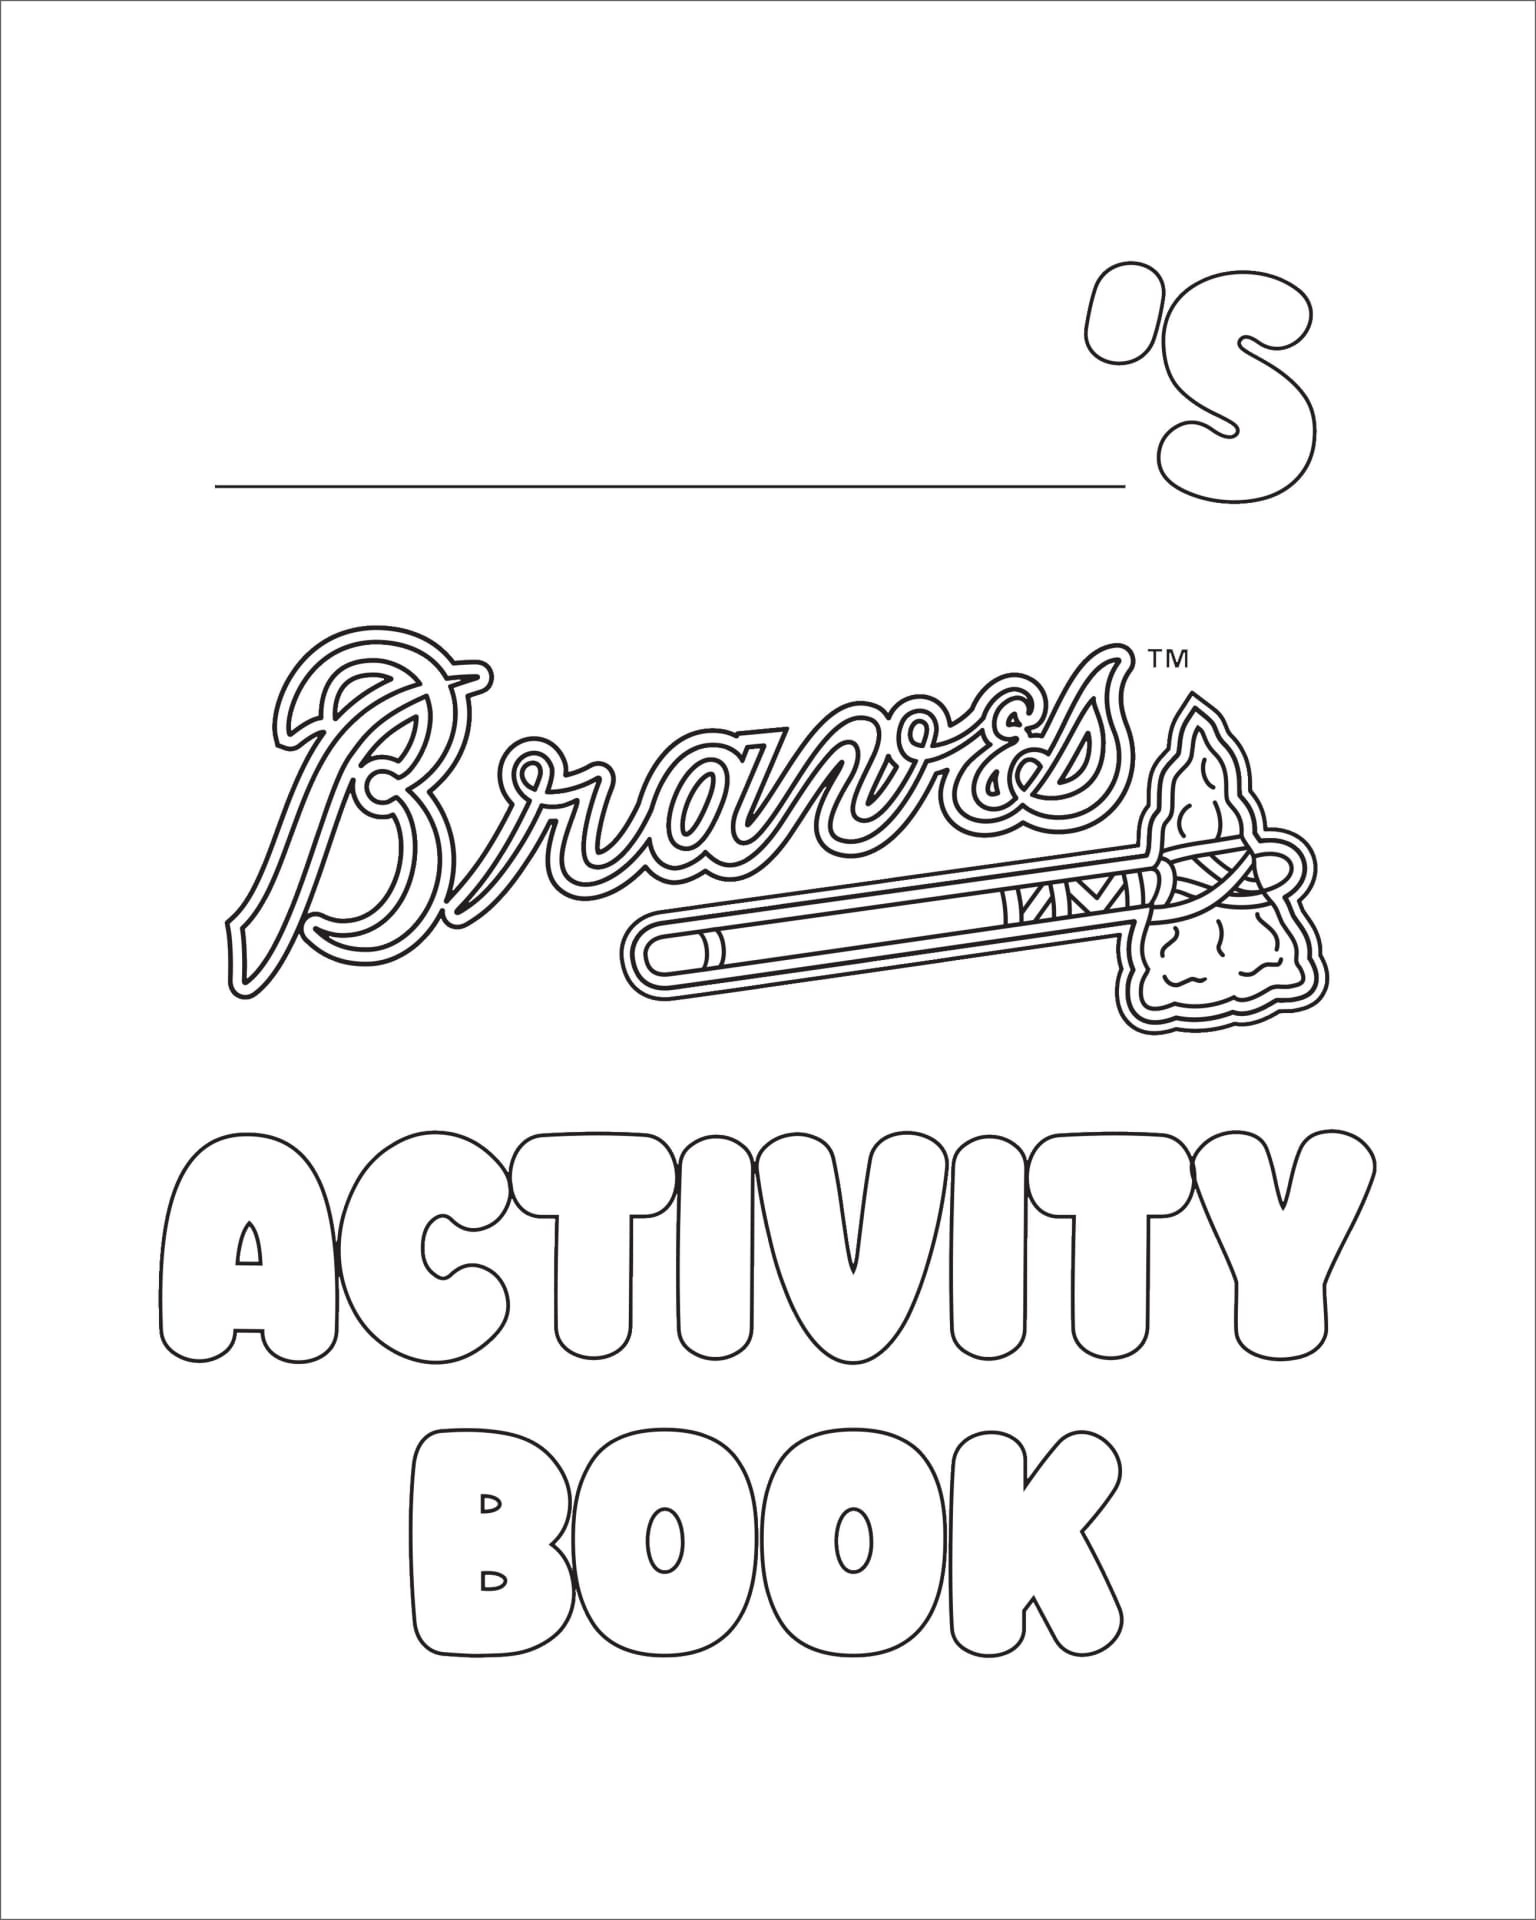 Atlanta Braves Coloring Pages Printable Pdf - Atlanta Braves Coloring Book